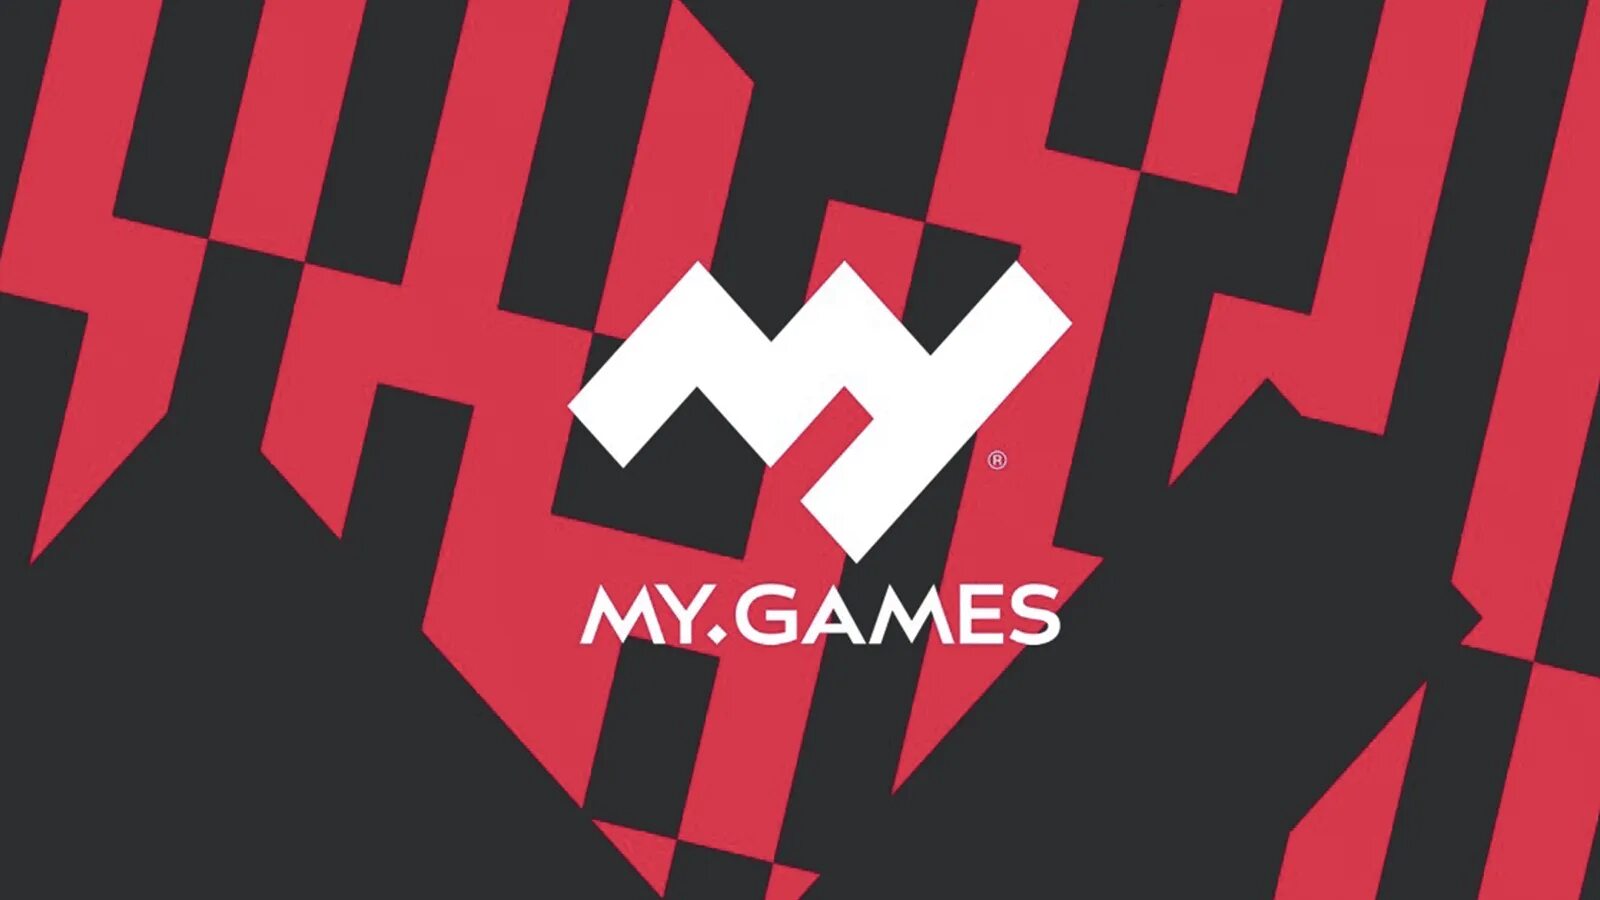 My games. My games logo. My games игровой центр логотип. Бренд game.